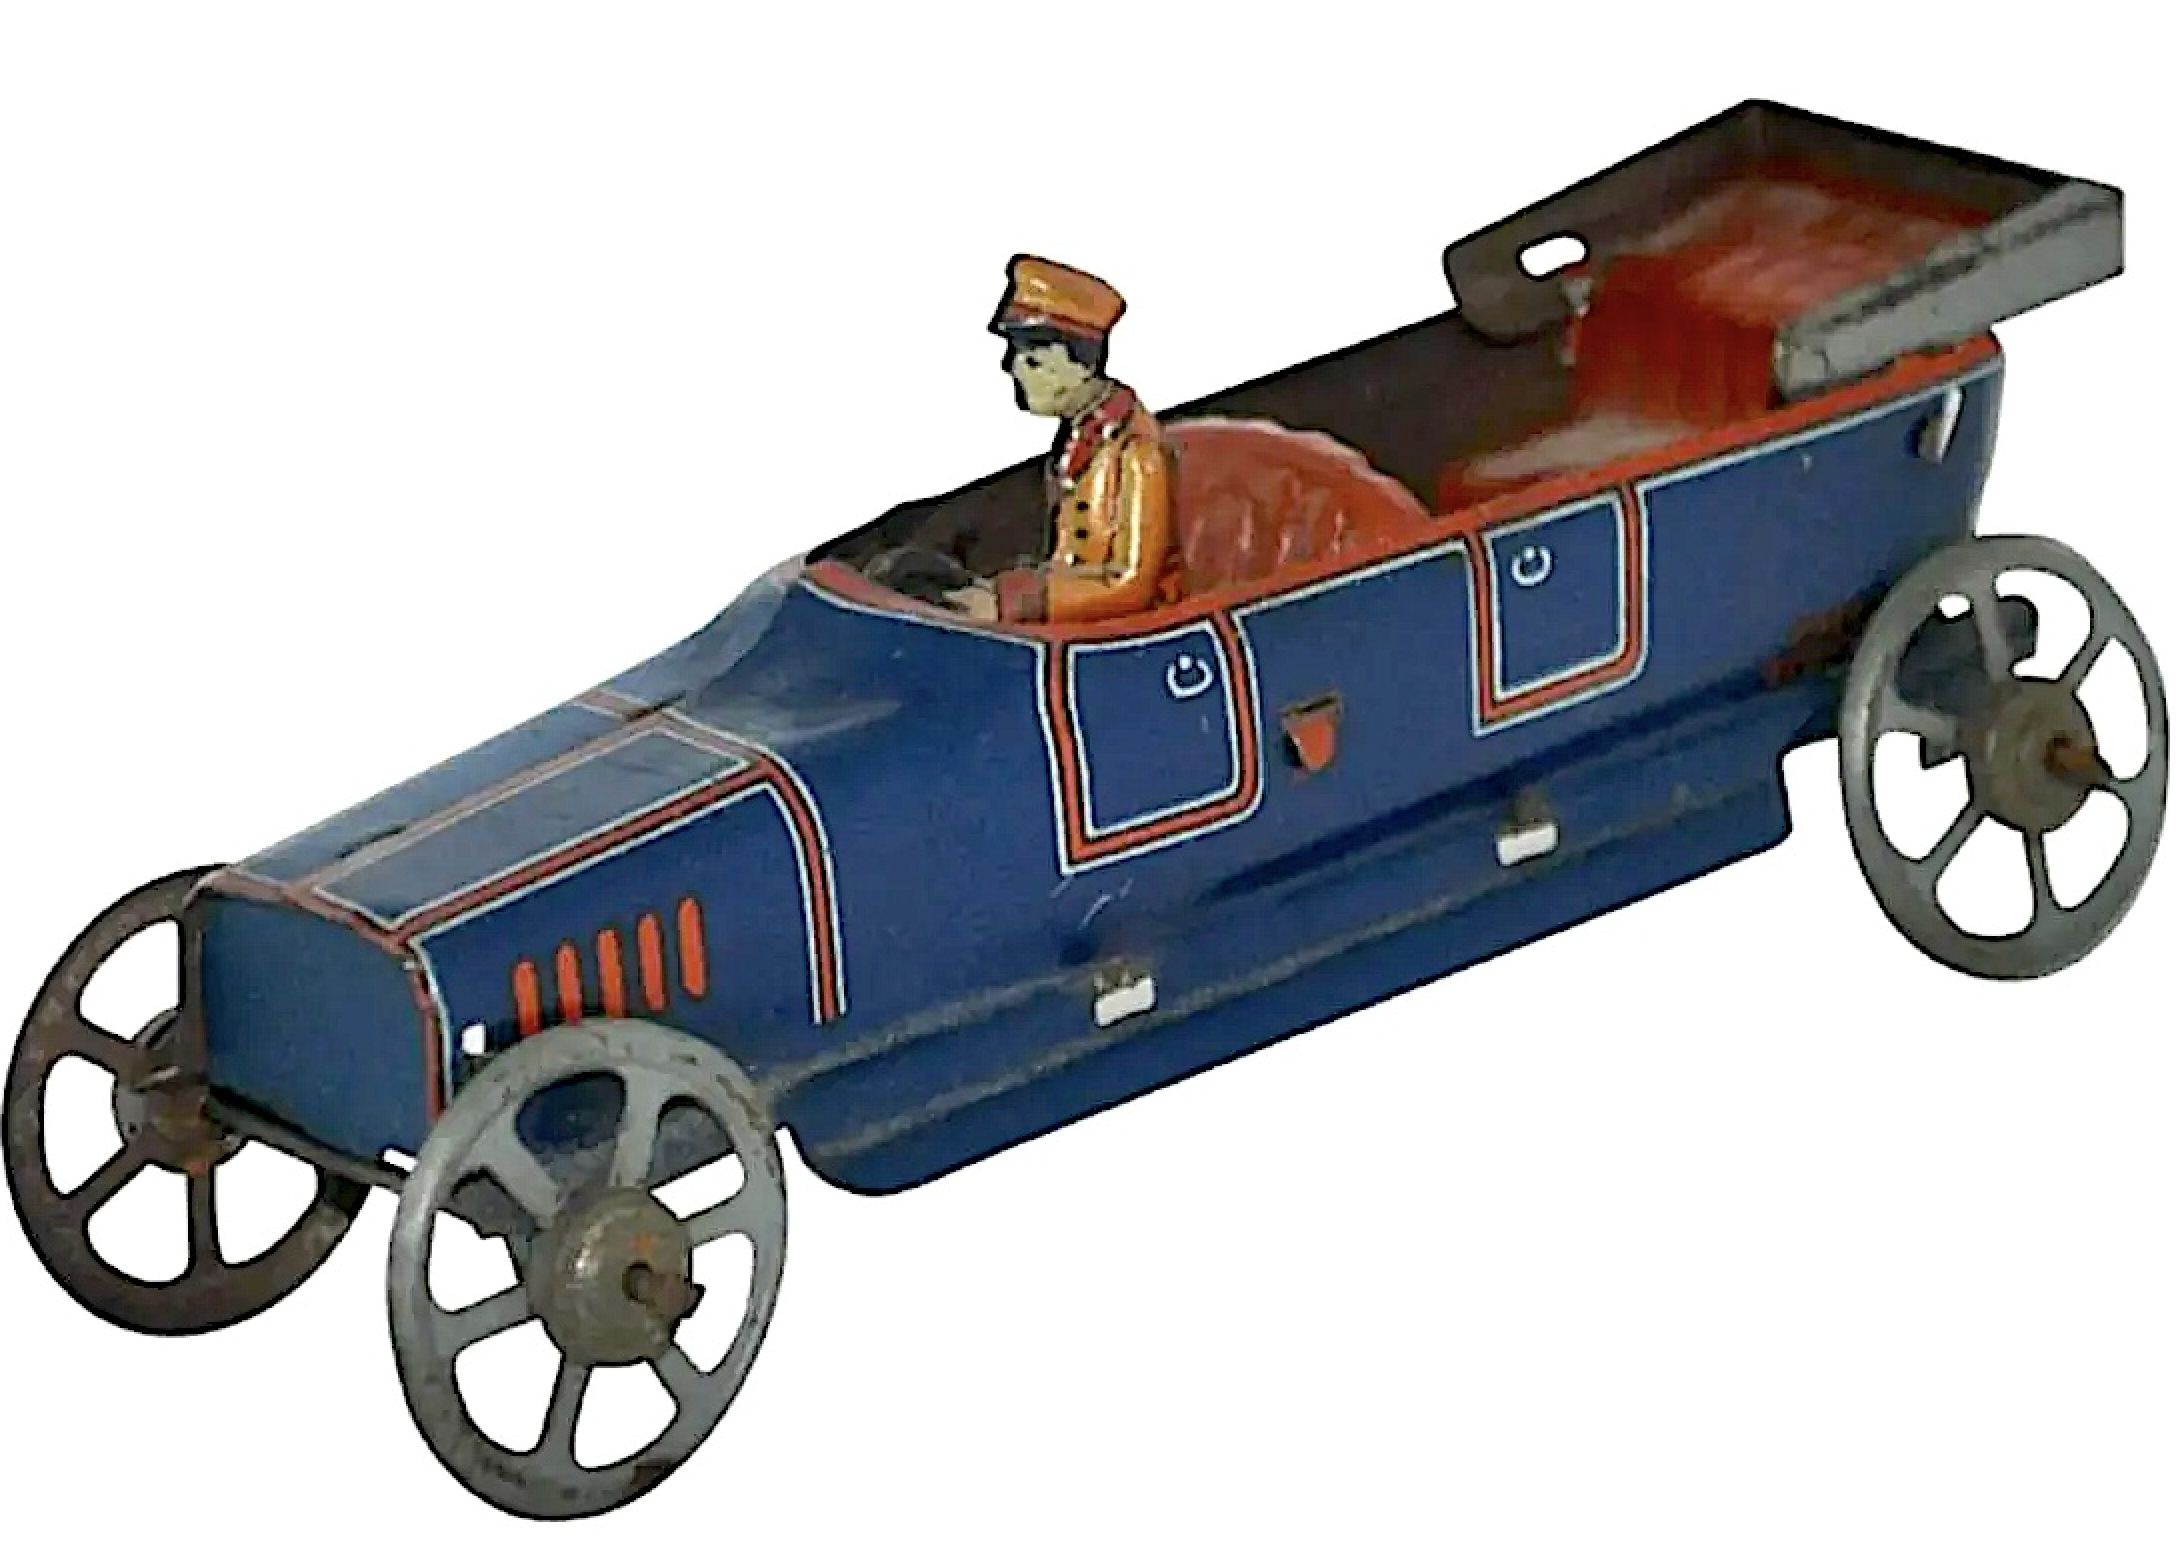 Circa-1900s Georg Fischer tin litho toy tourer car, est. $500-$1,000